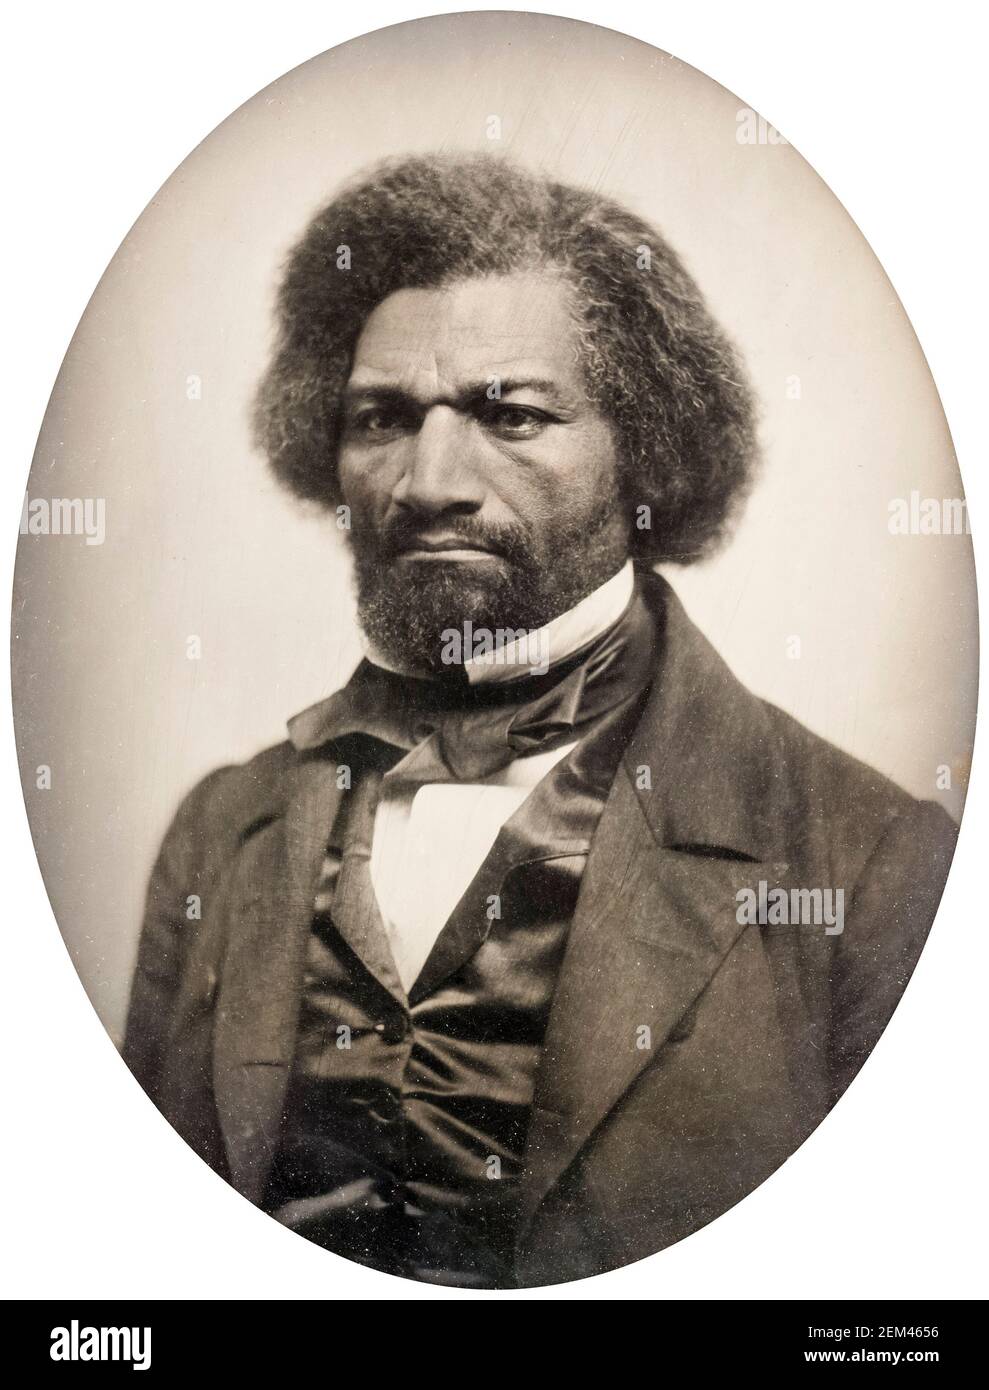 Frederick Douglass (1818-1895), portrait photograph by unknown artist, 1856 Stock Photo